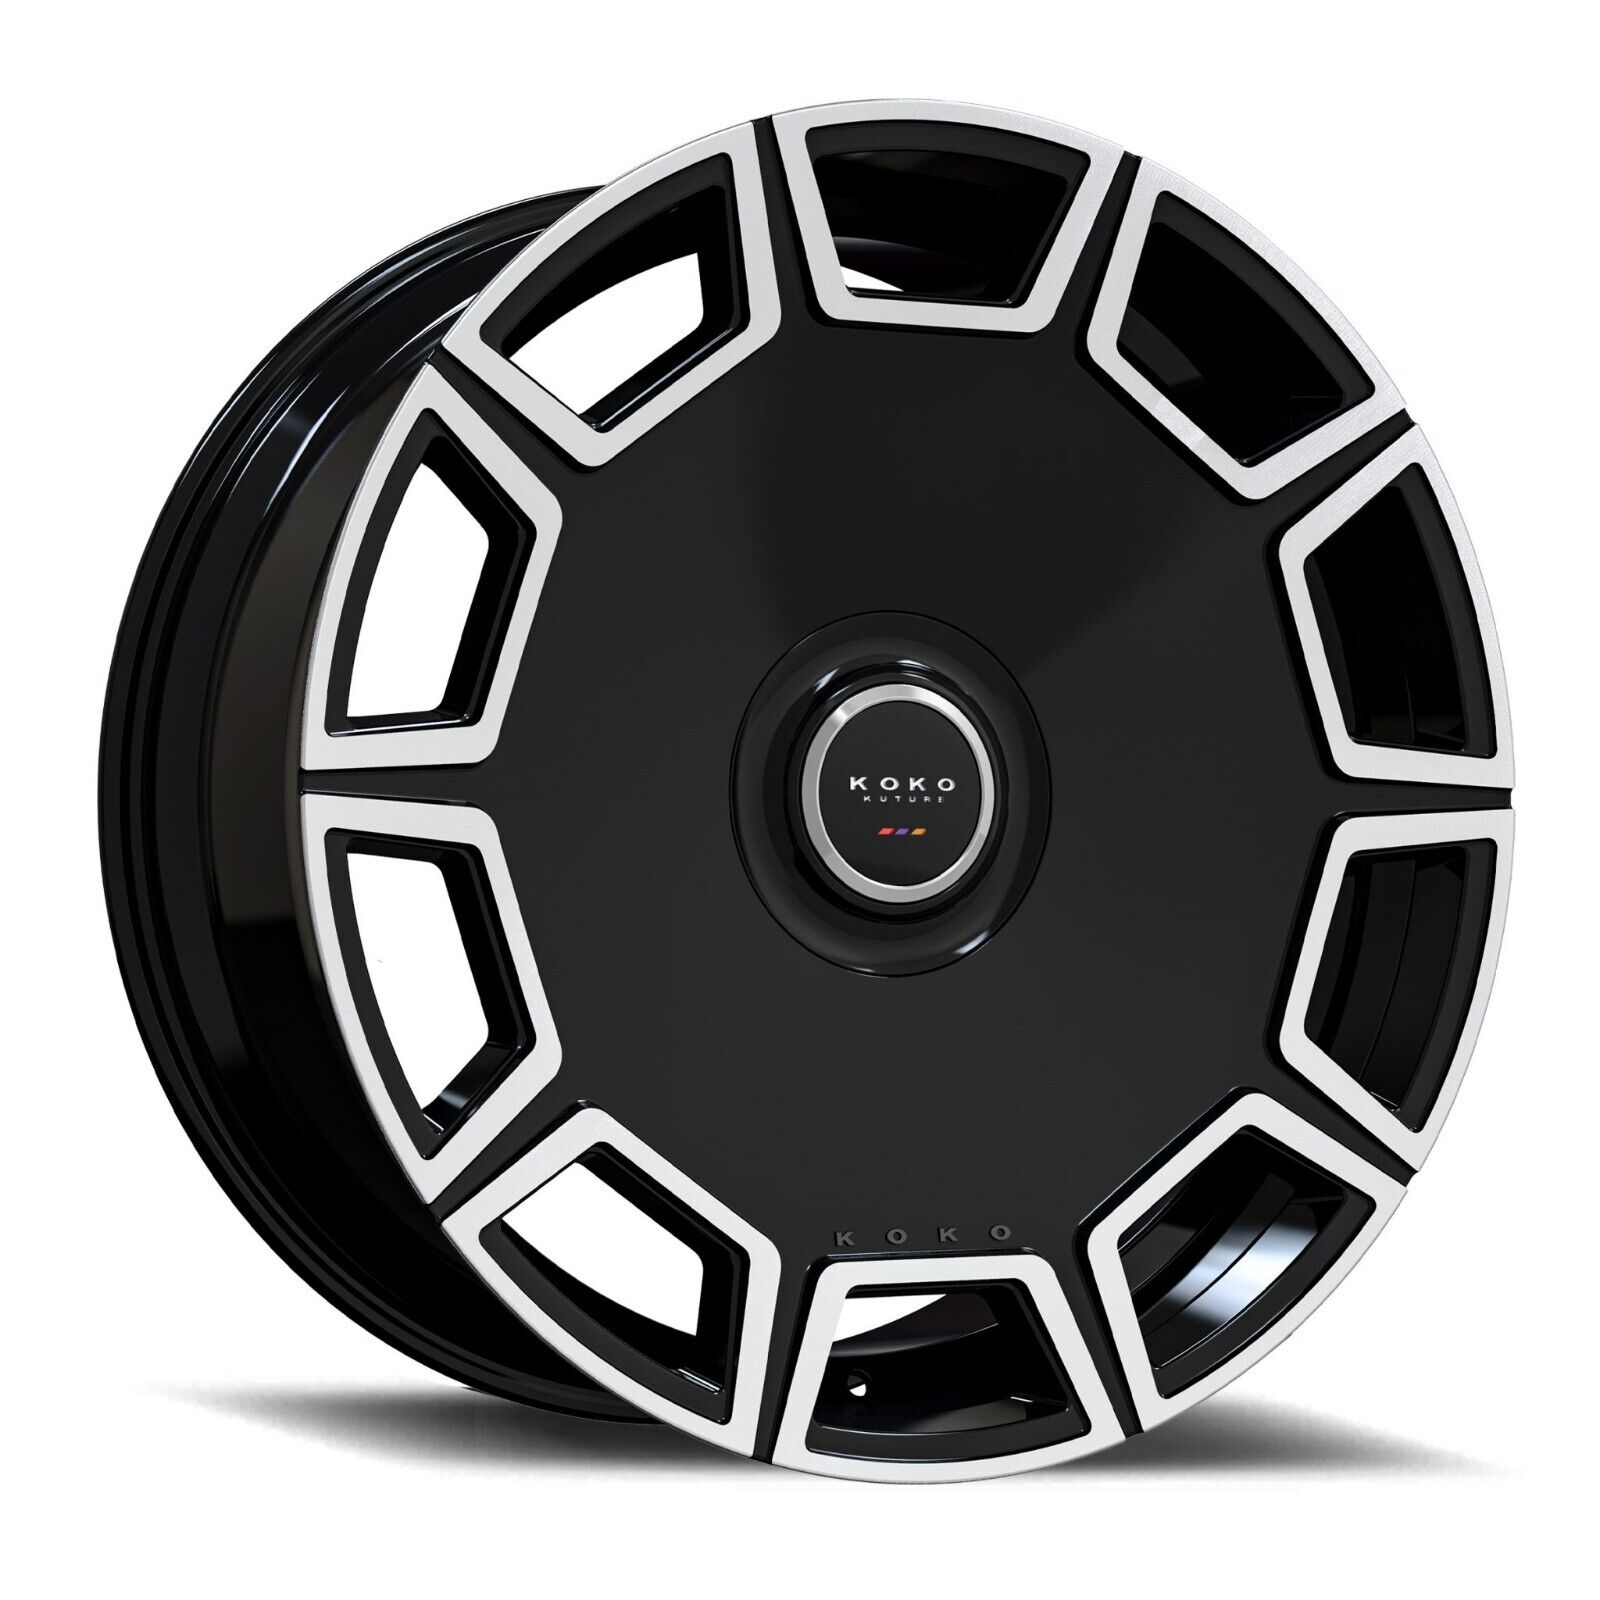 22'' inch Giovanna Sicily Black Machine Wheels Tires S580 S63 740i A8 Bentley A7